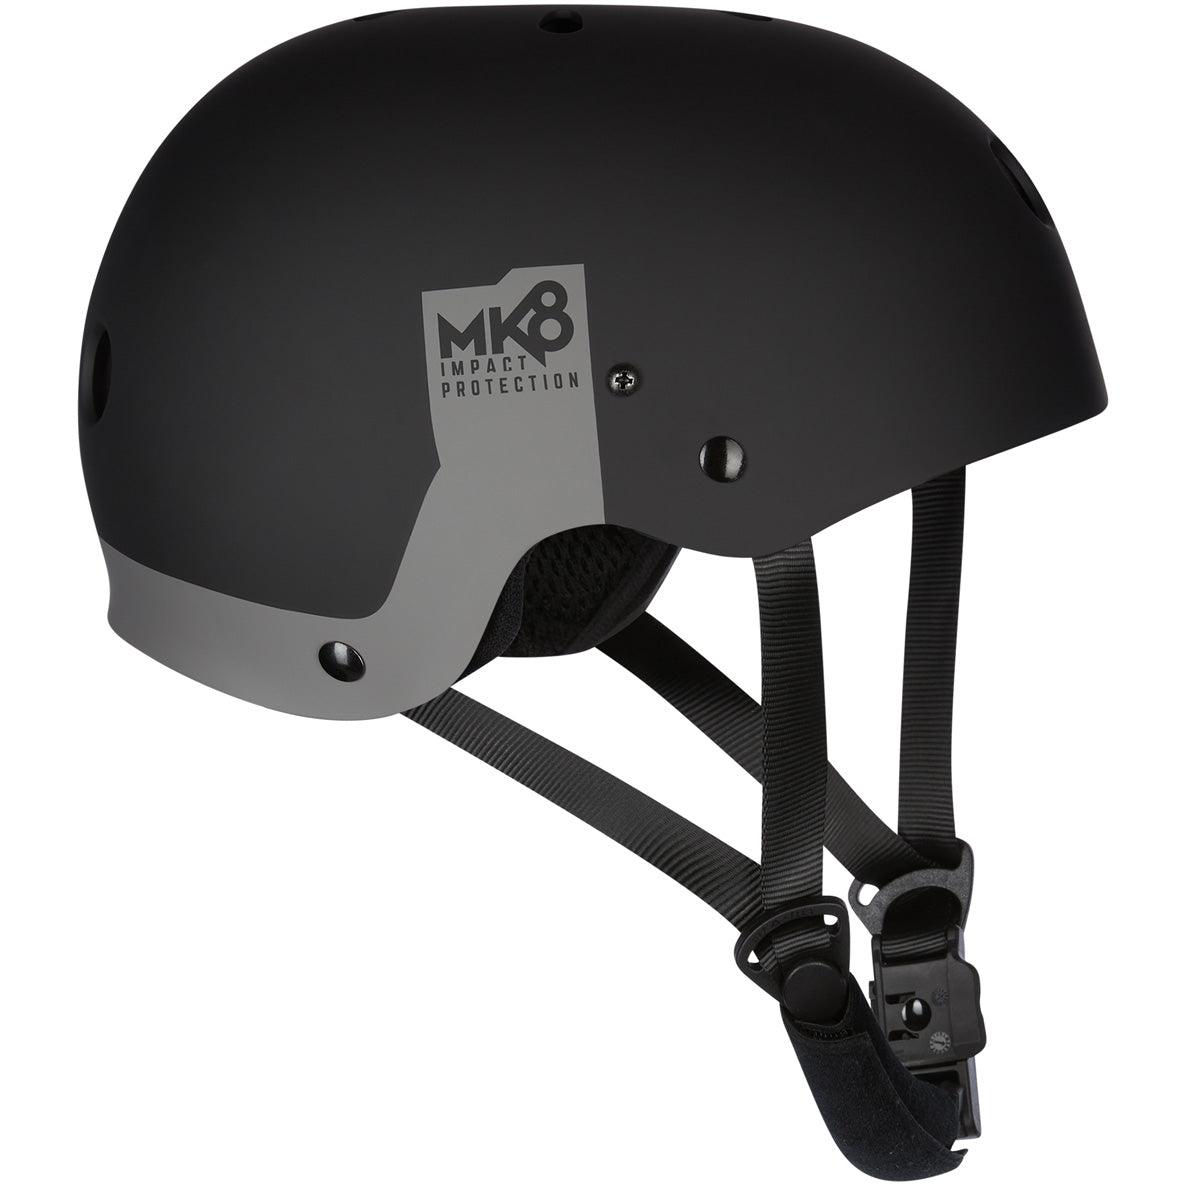 Mystic MK8-X Helmet - Kiteshop.com